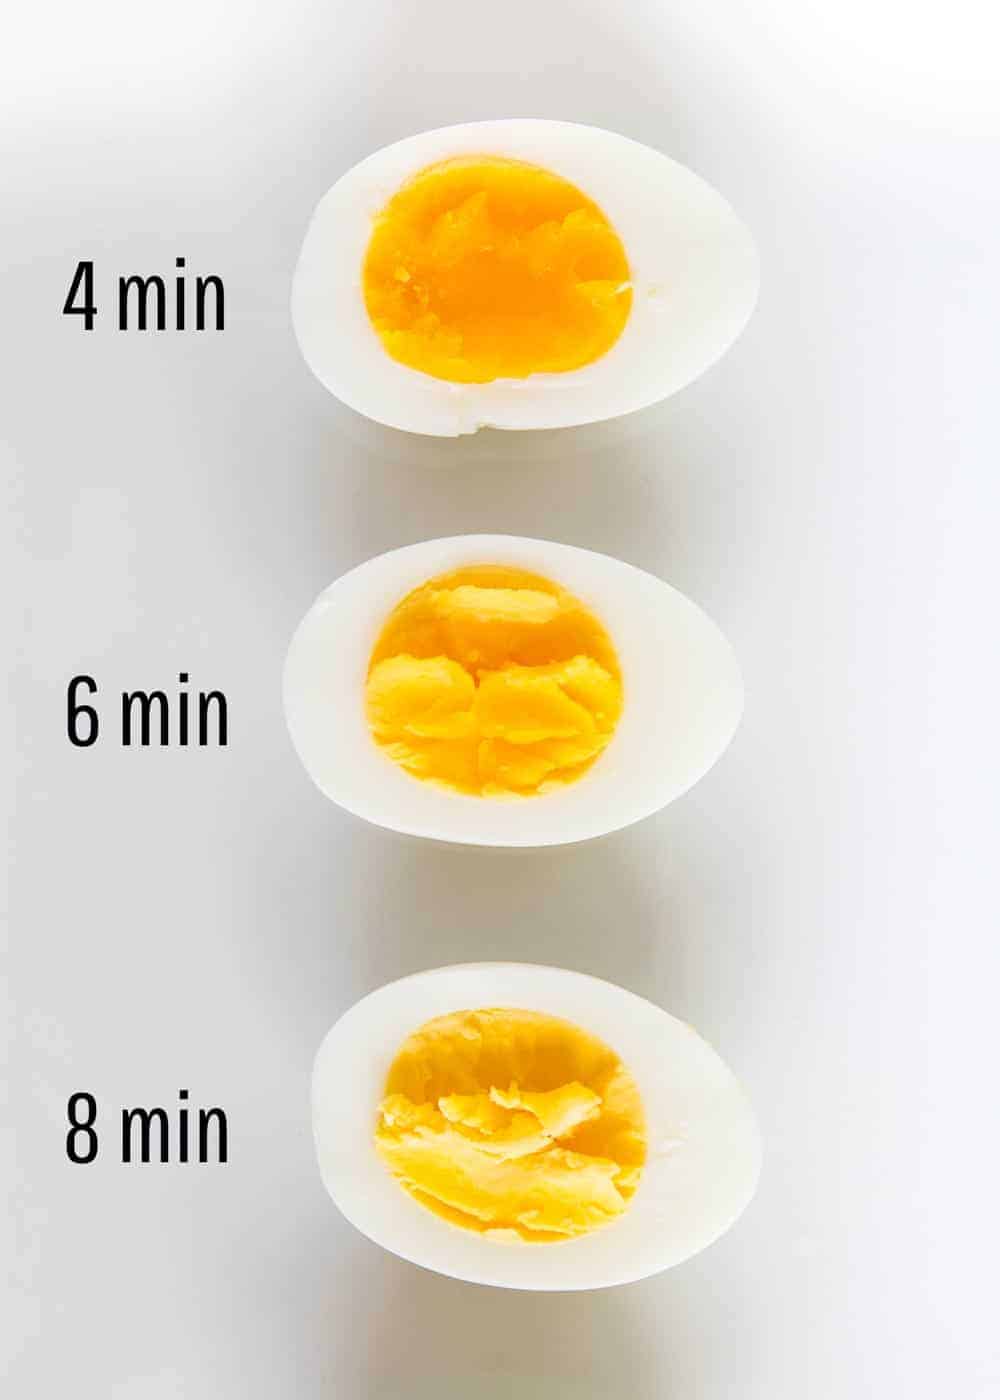 Hard boiled eggs time chart.